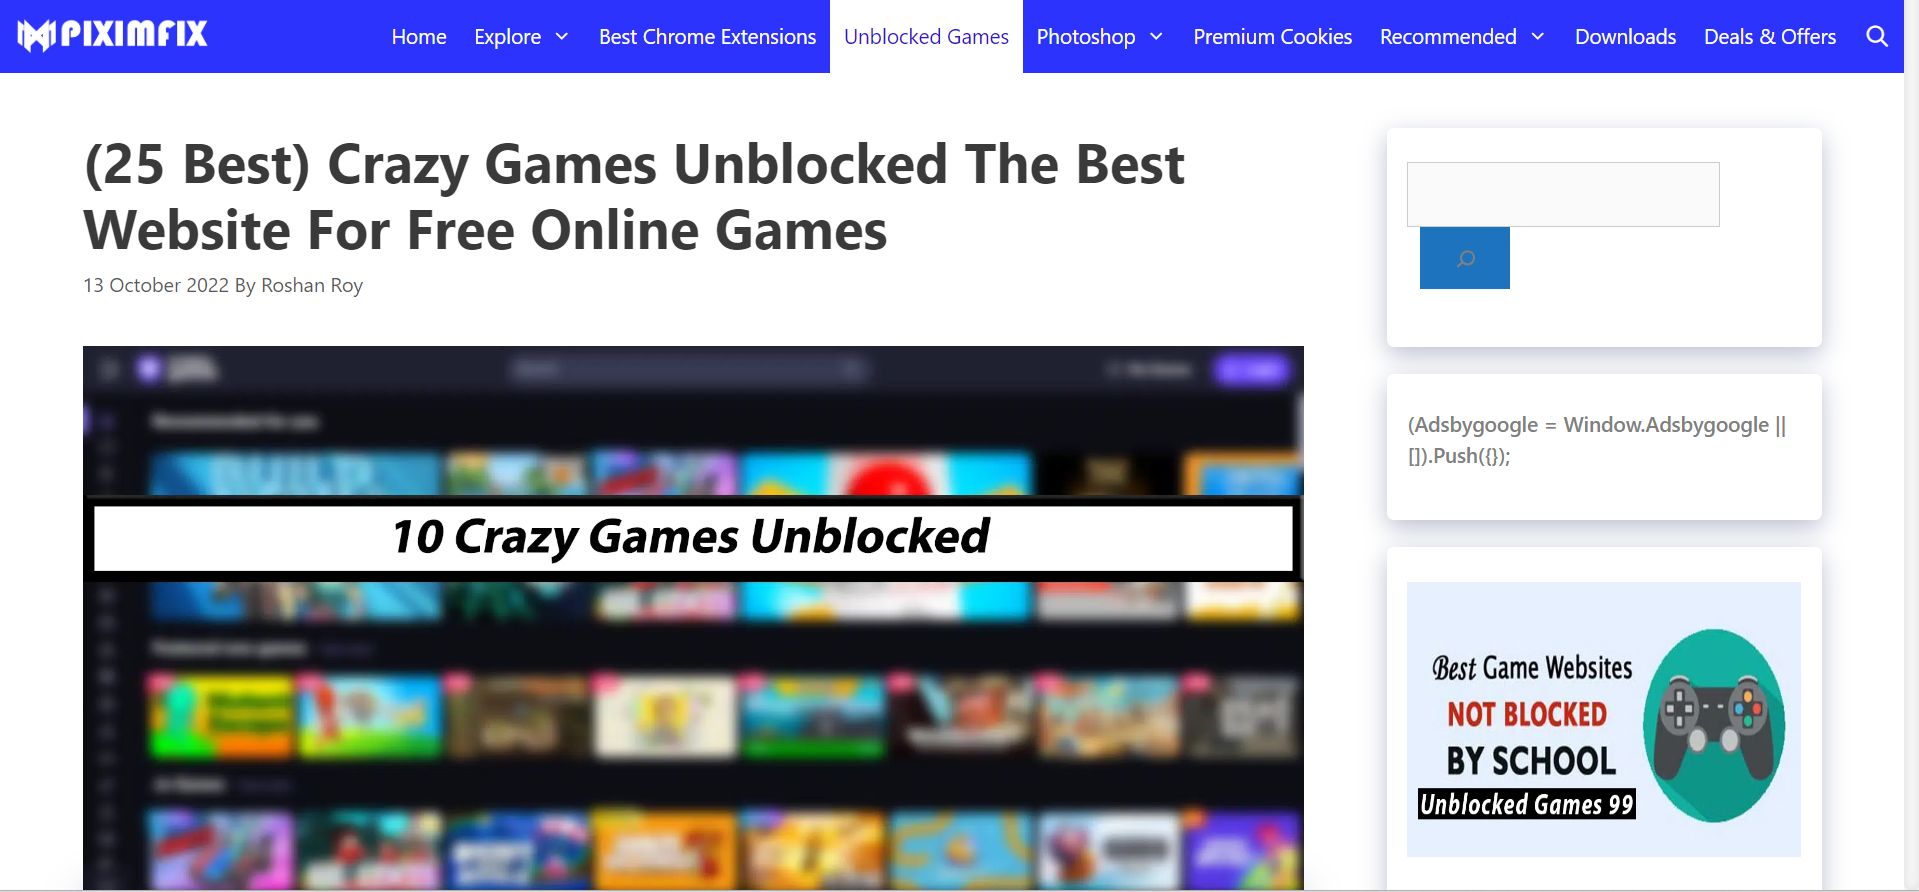 BestCrazyGames - Free Online Games - Page 1